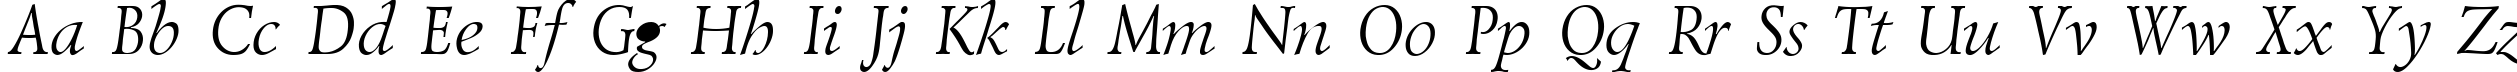 Пример написания английского алфавита шрифтом Lazursky Italic:001.001